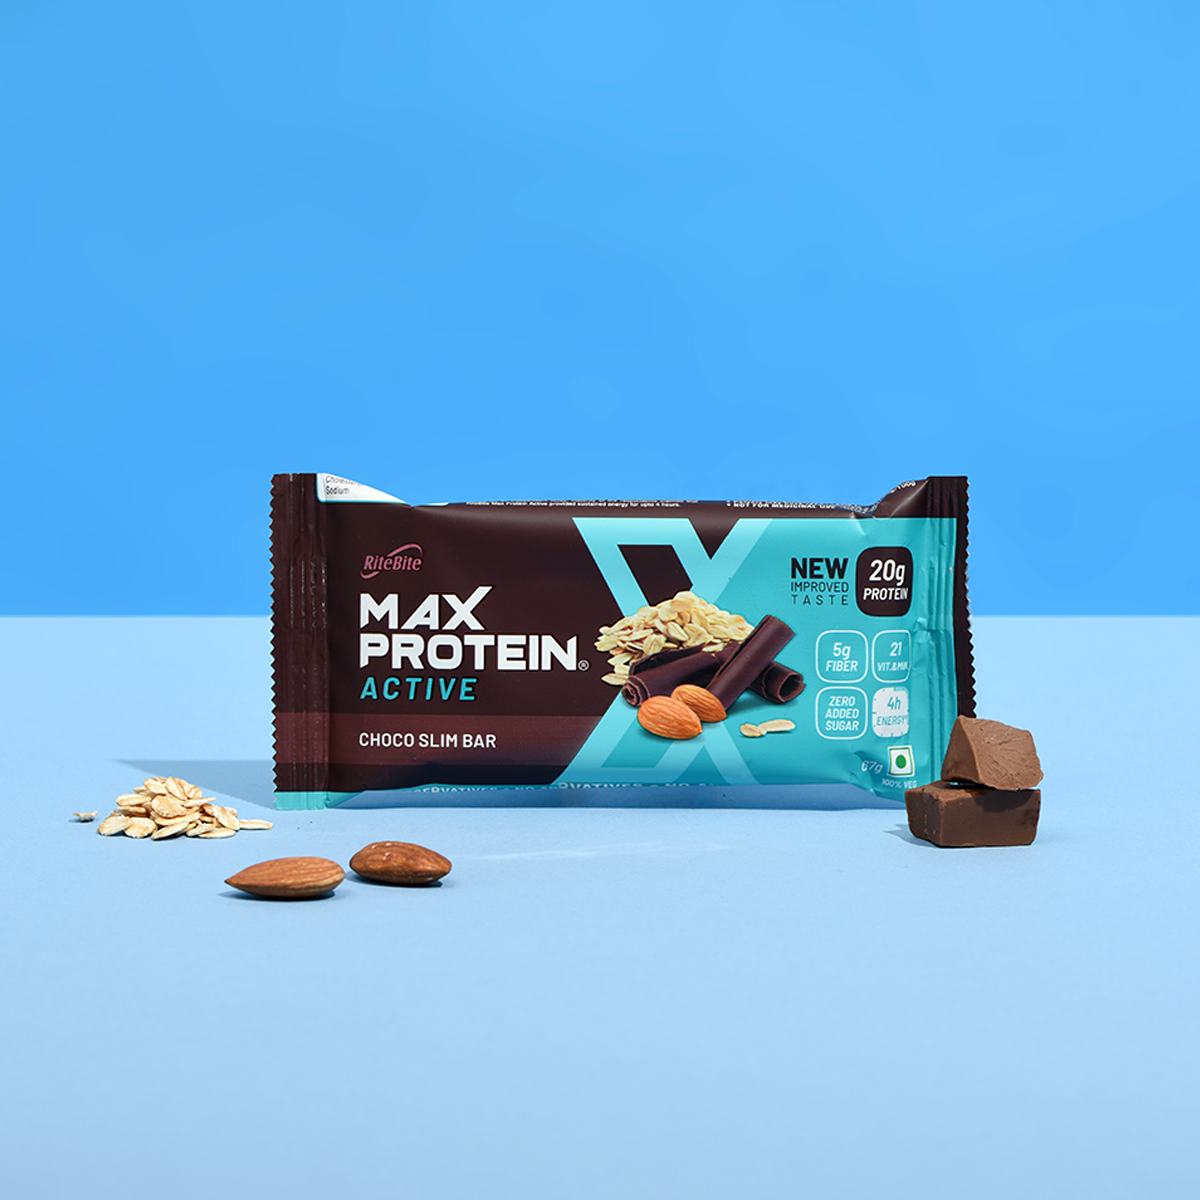 Max Protein Active Choco Slim